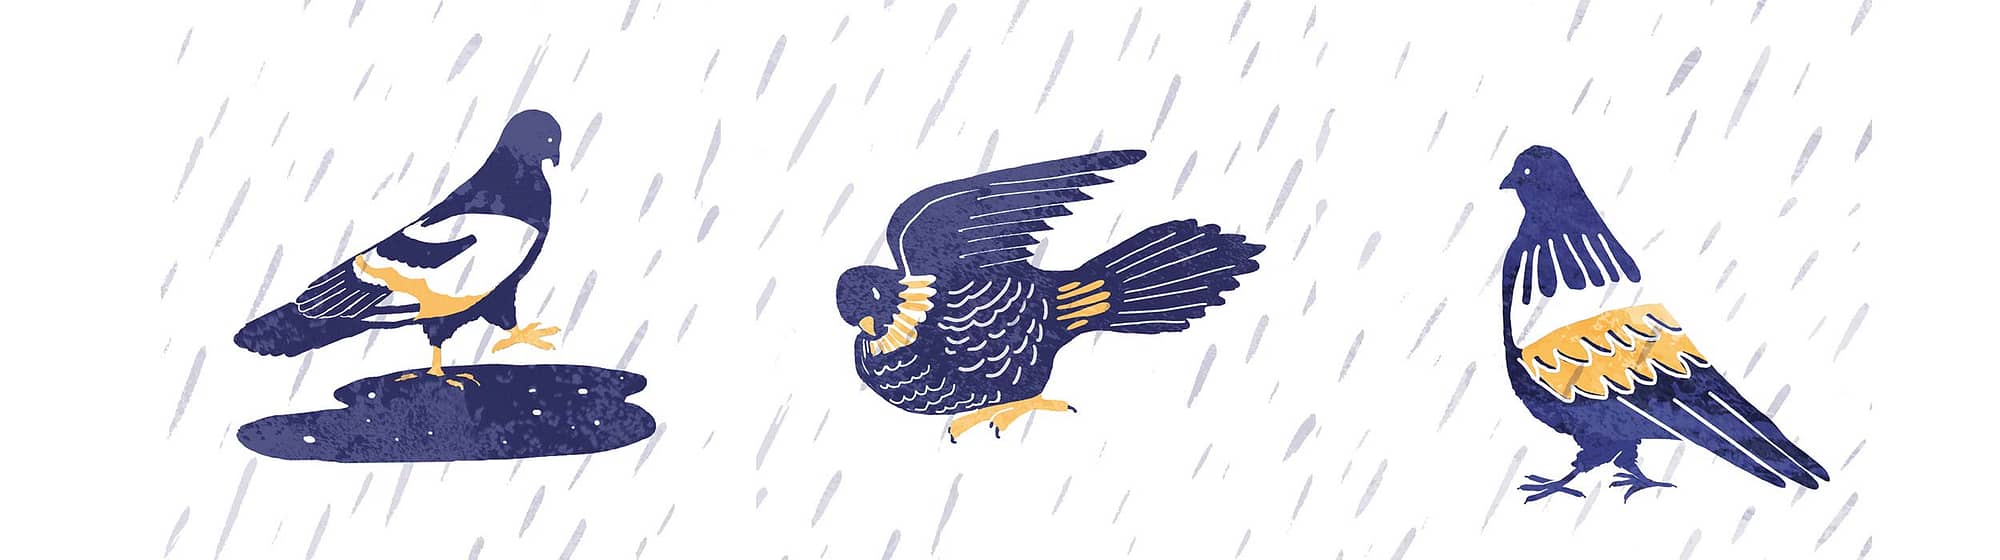 pigeons bathing showering in the rain washing armpits illustration blue and pink katilacey freelance illustrator moments of joy